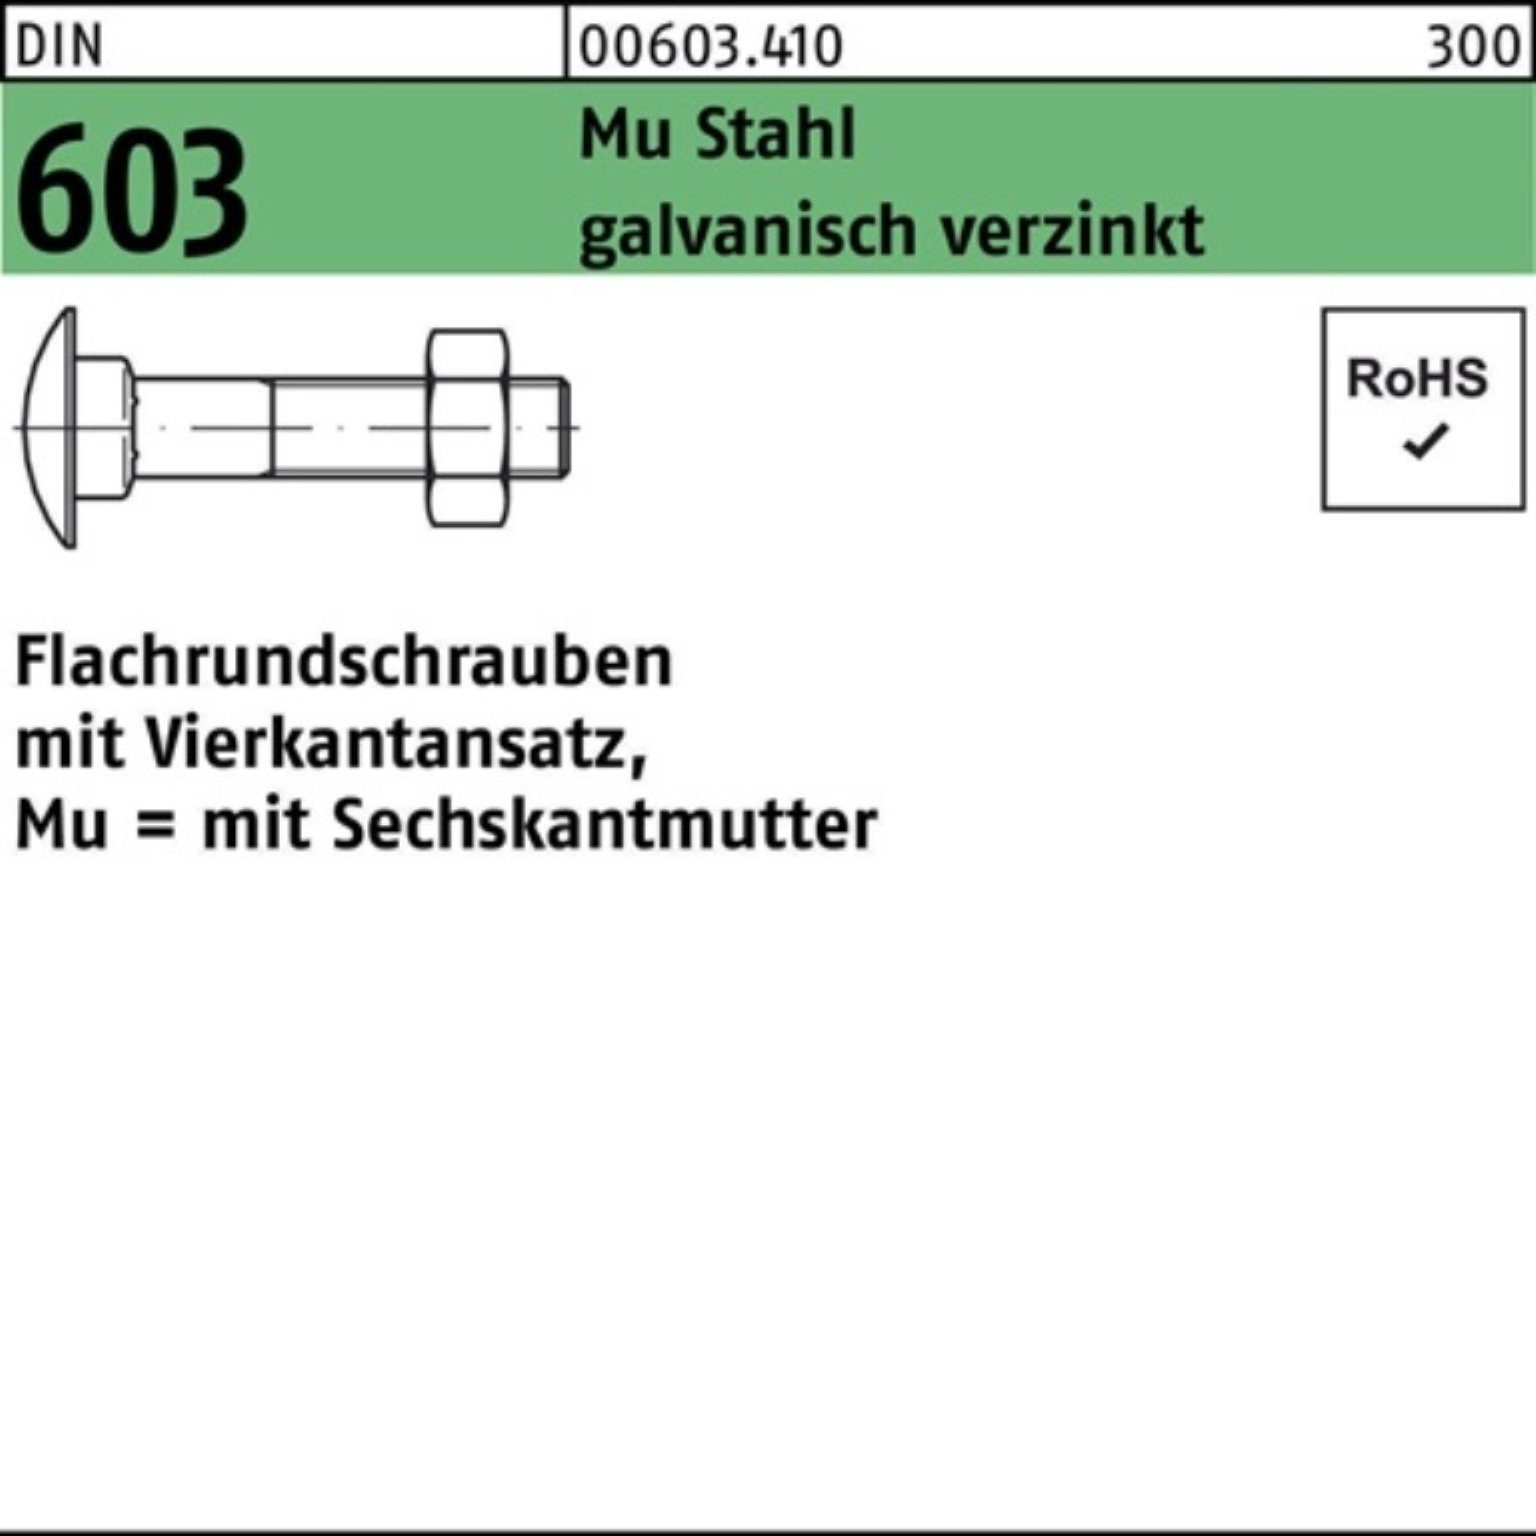 603 Vierkantansatz/6-ktmutter Flachrundschraube Reyher 100er DIN Pack Schraube M6x110